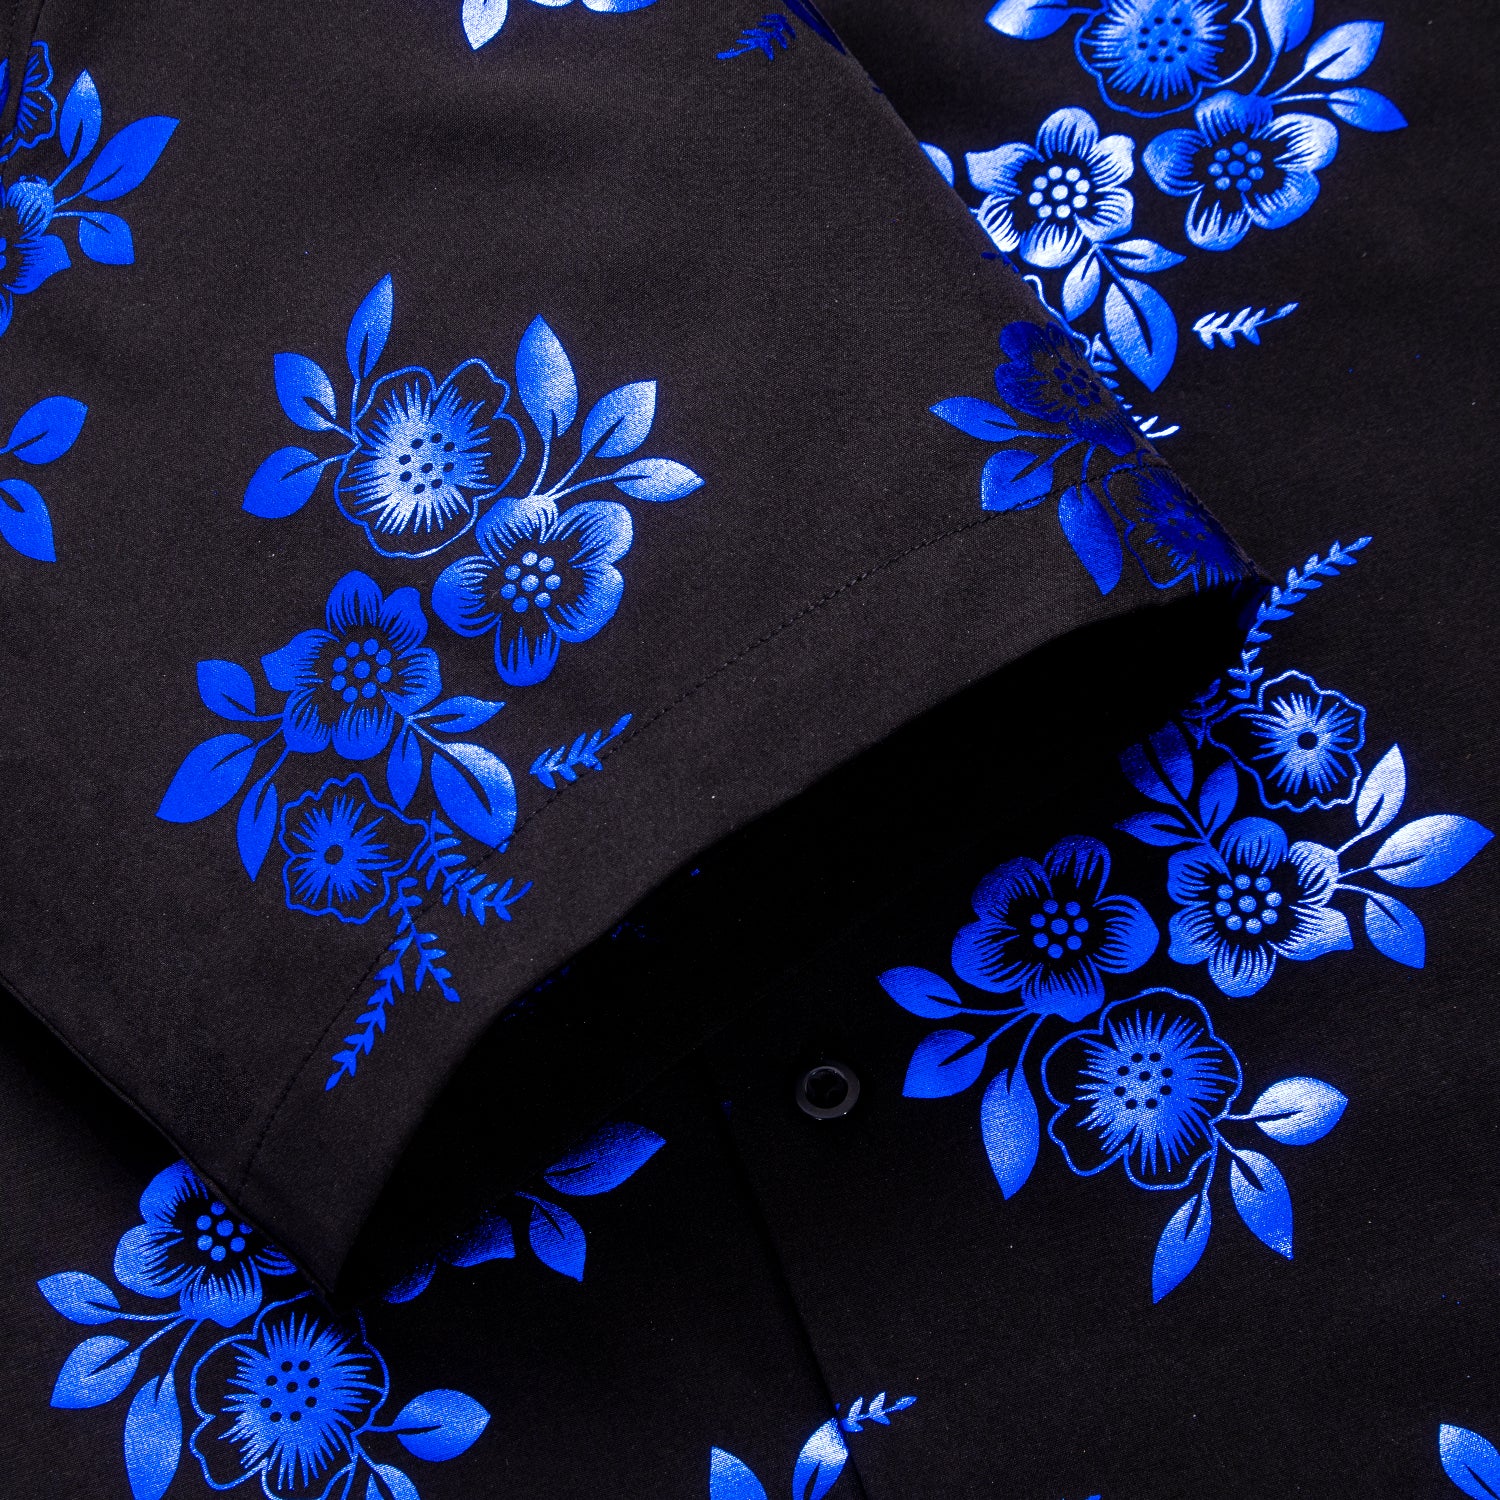 Clearance Sale New Black Blue Floral Men's Short Sleeve Shirt